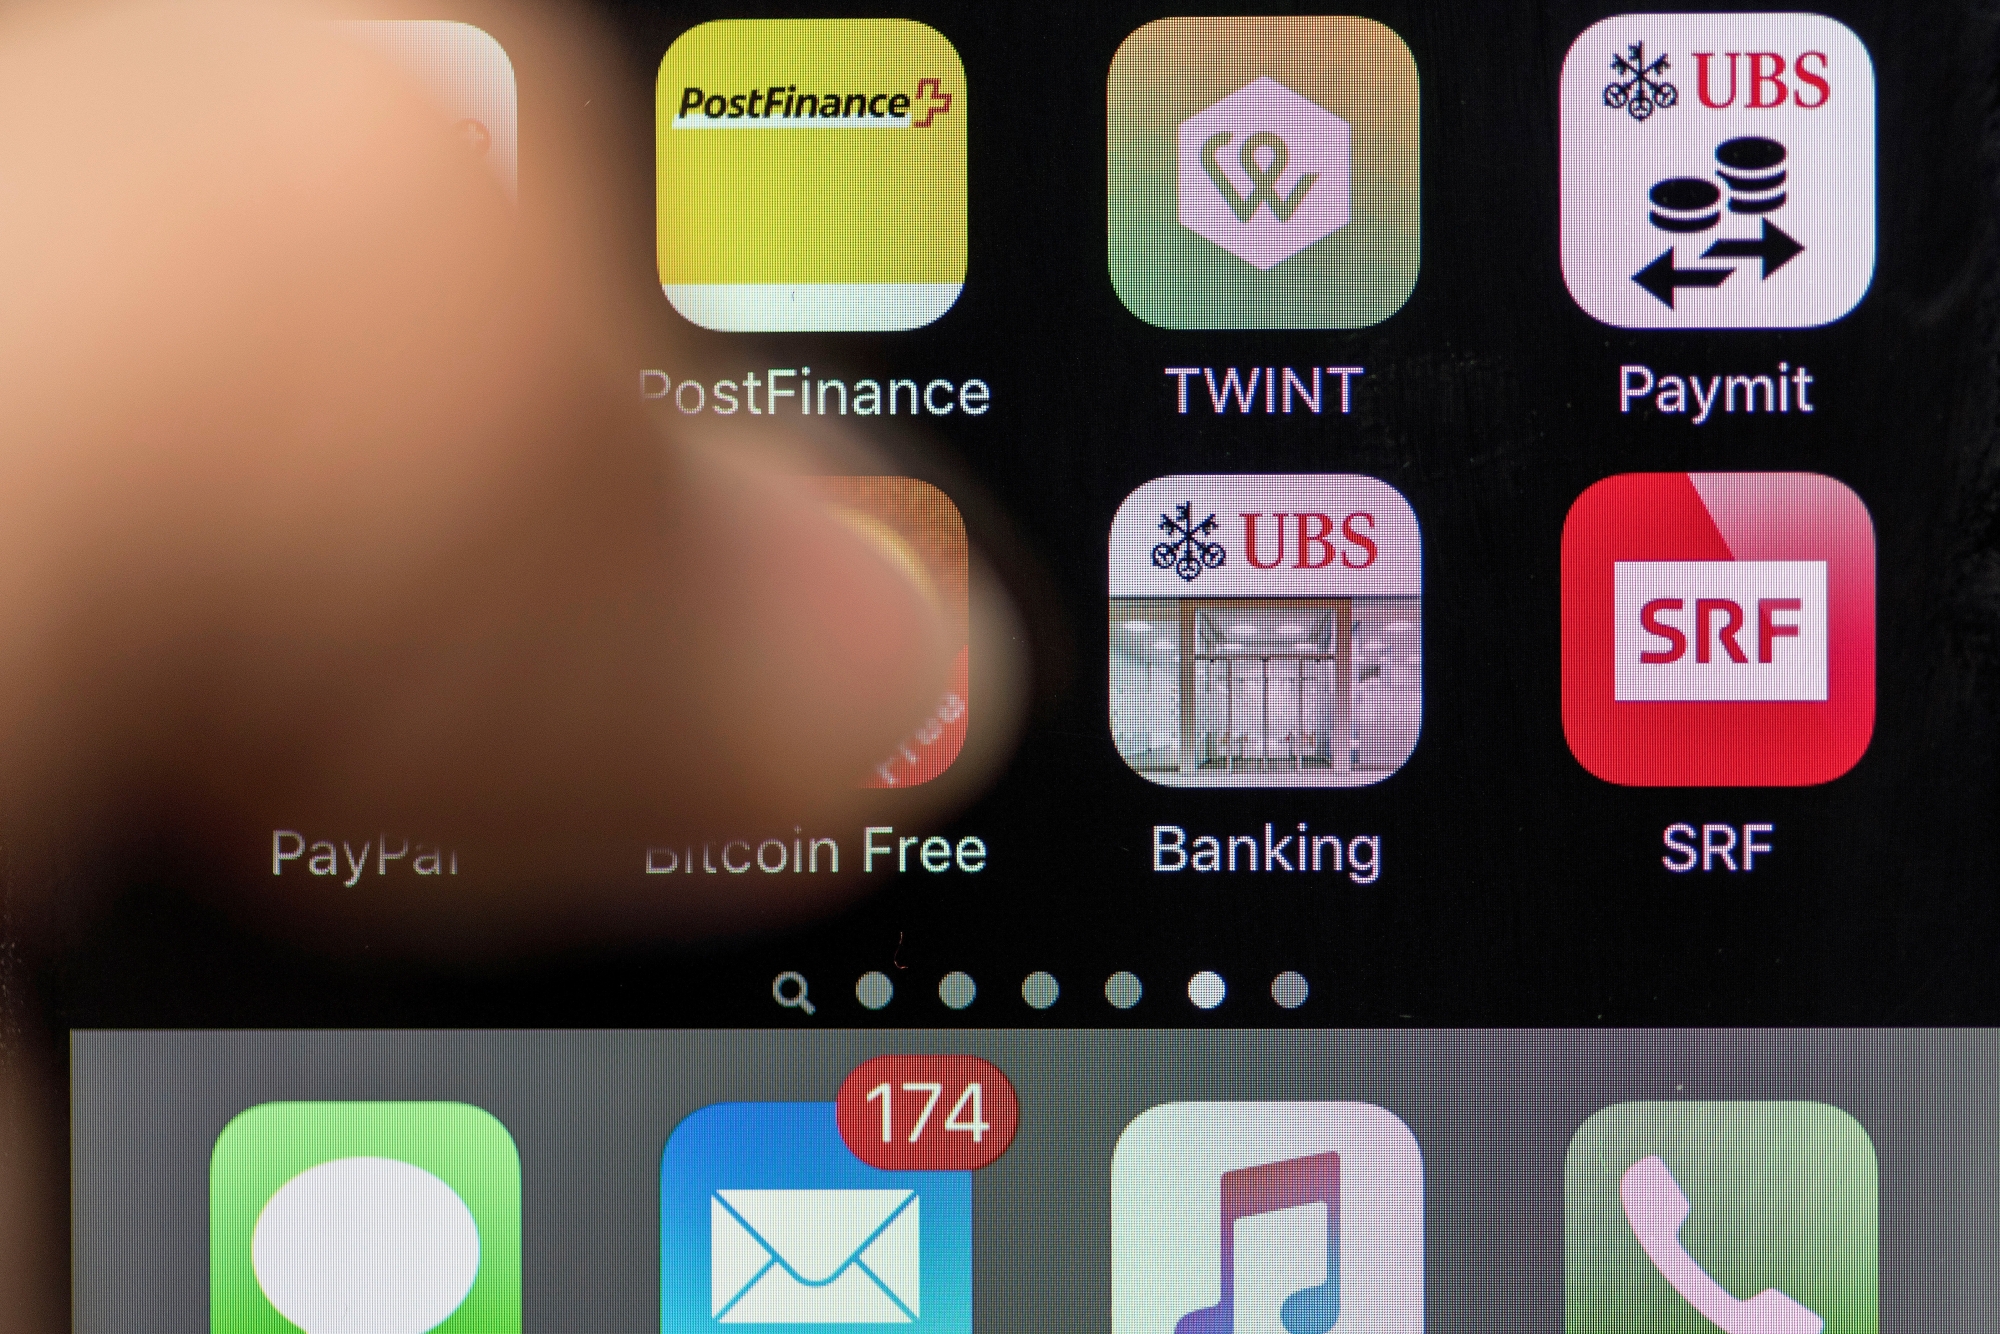 Die App UBS Mobile Banking am 05. Januar 2016 auf einem I Phone.
ArcInfo